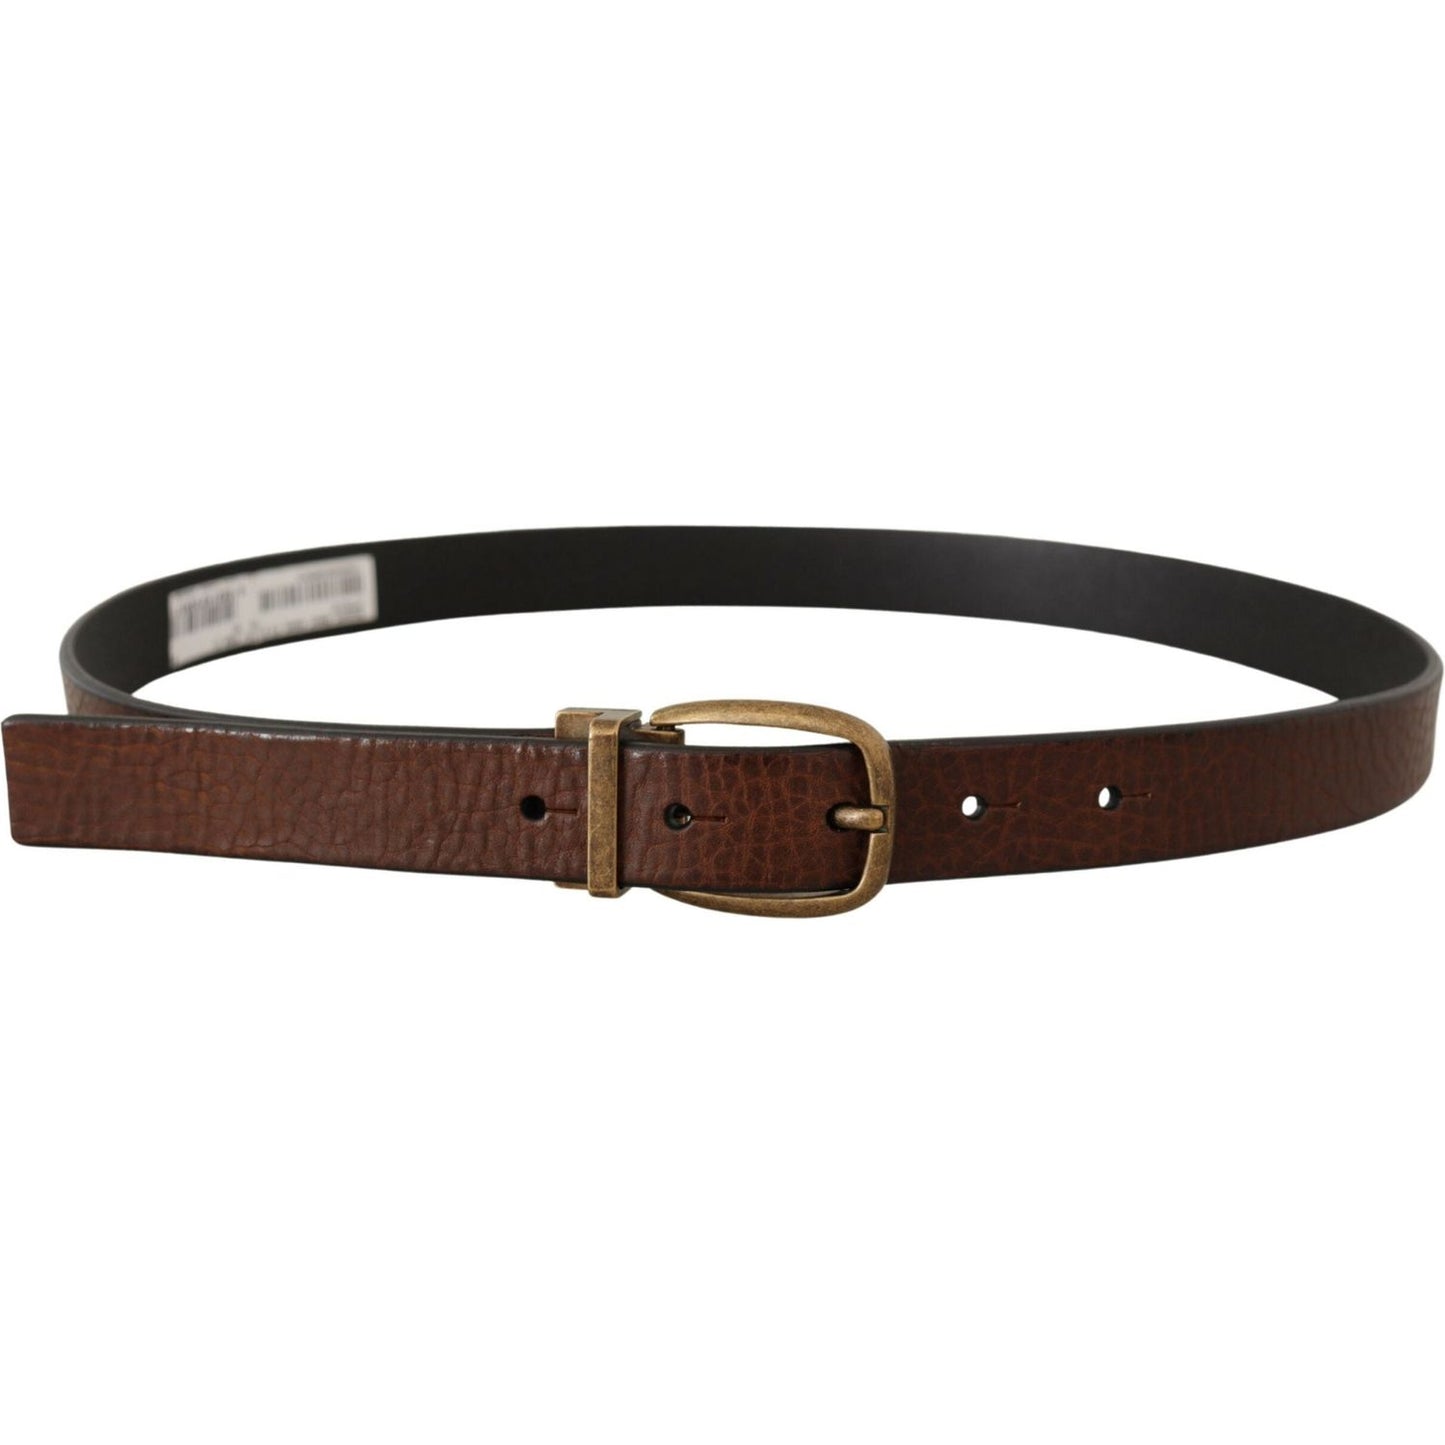 Dolce & Gabbana Elegant Leather Belt with Metal Buckle brown-leather-vintage-style-brass-metal-buckle-belt IMG_7326-scaled-4095d392-5b1.jpg